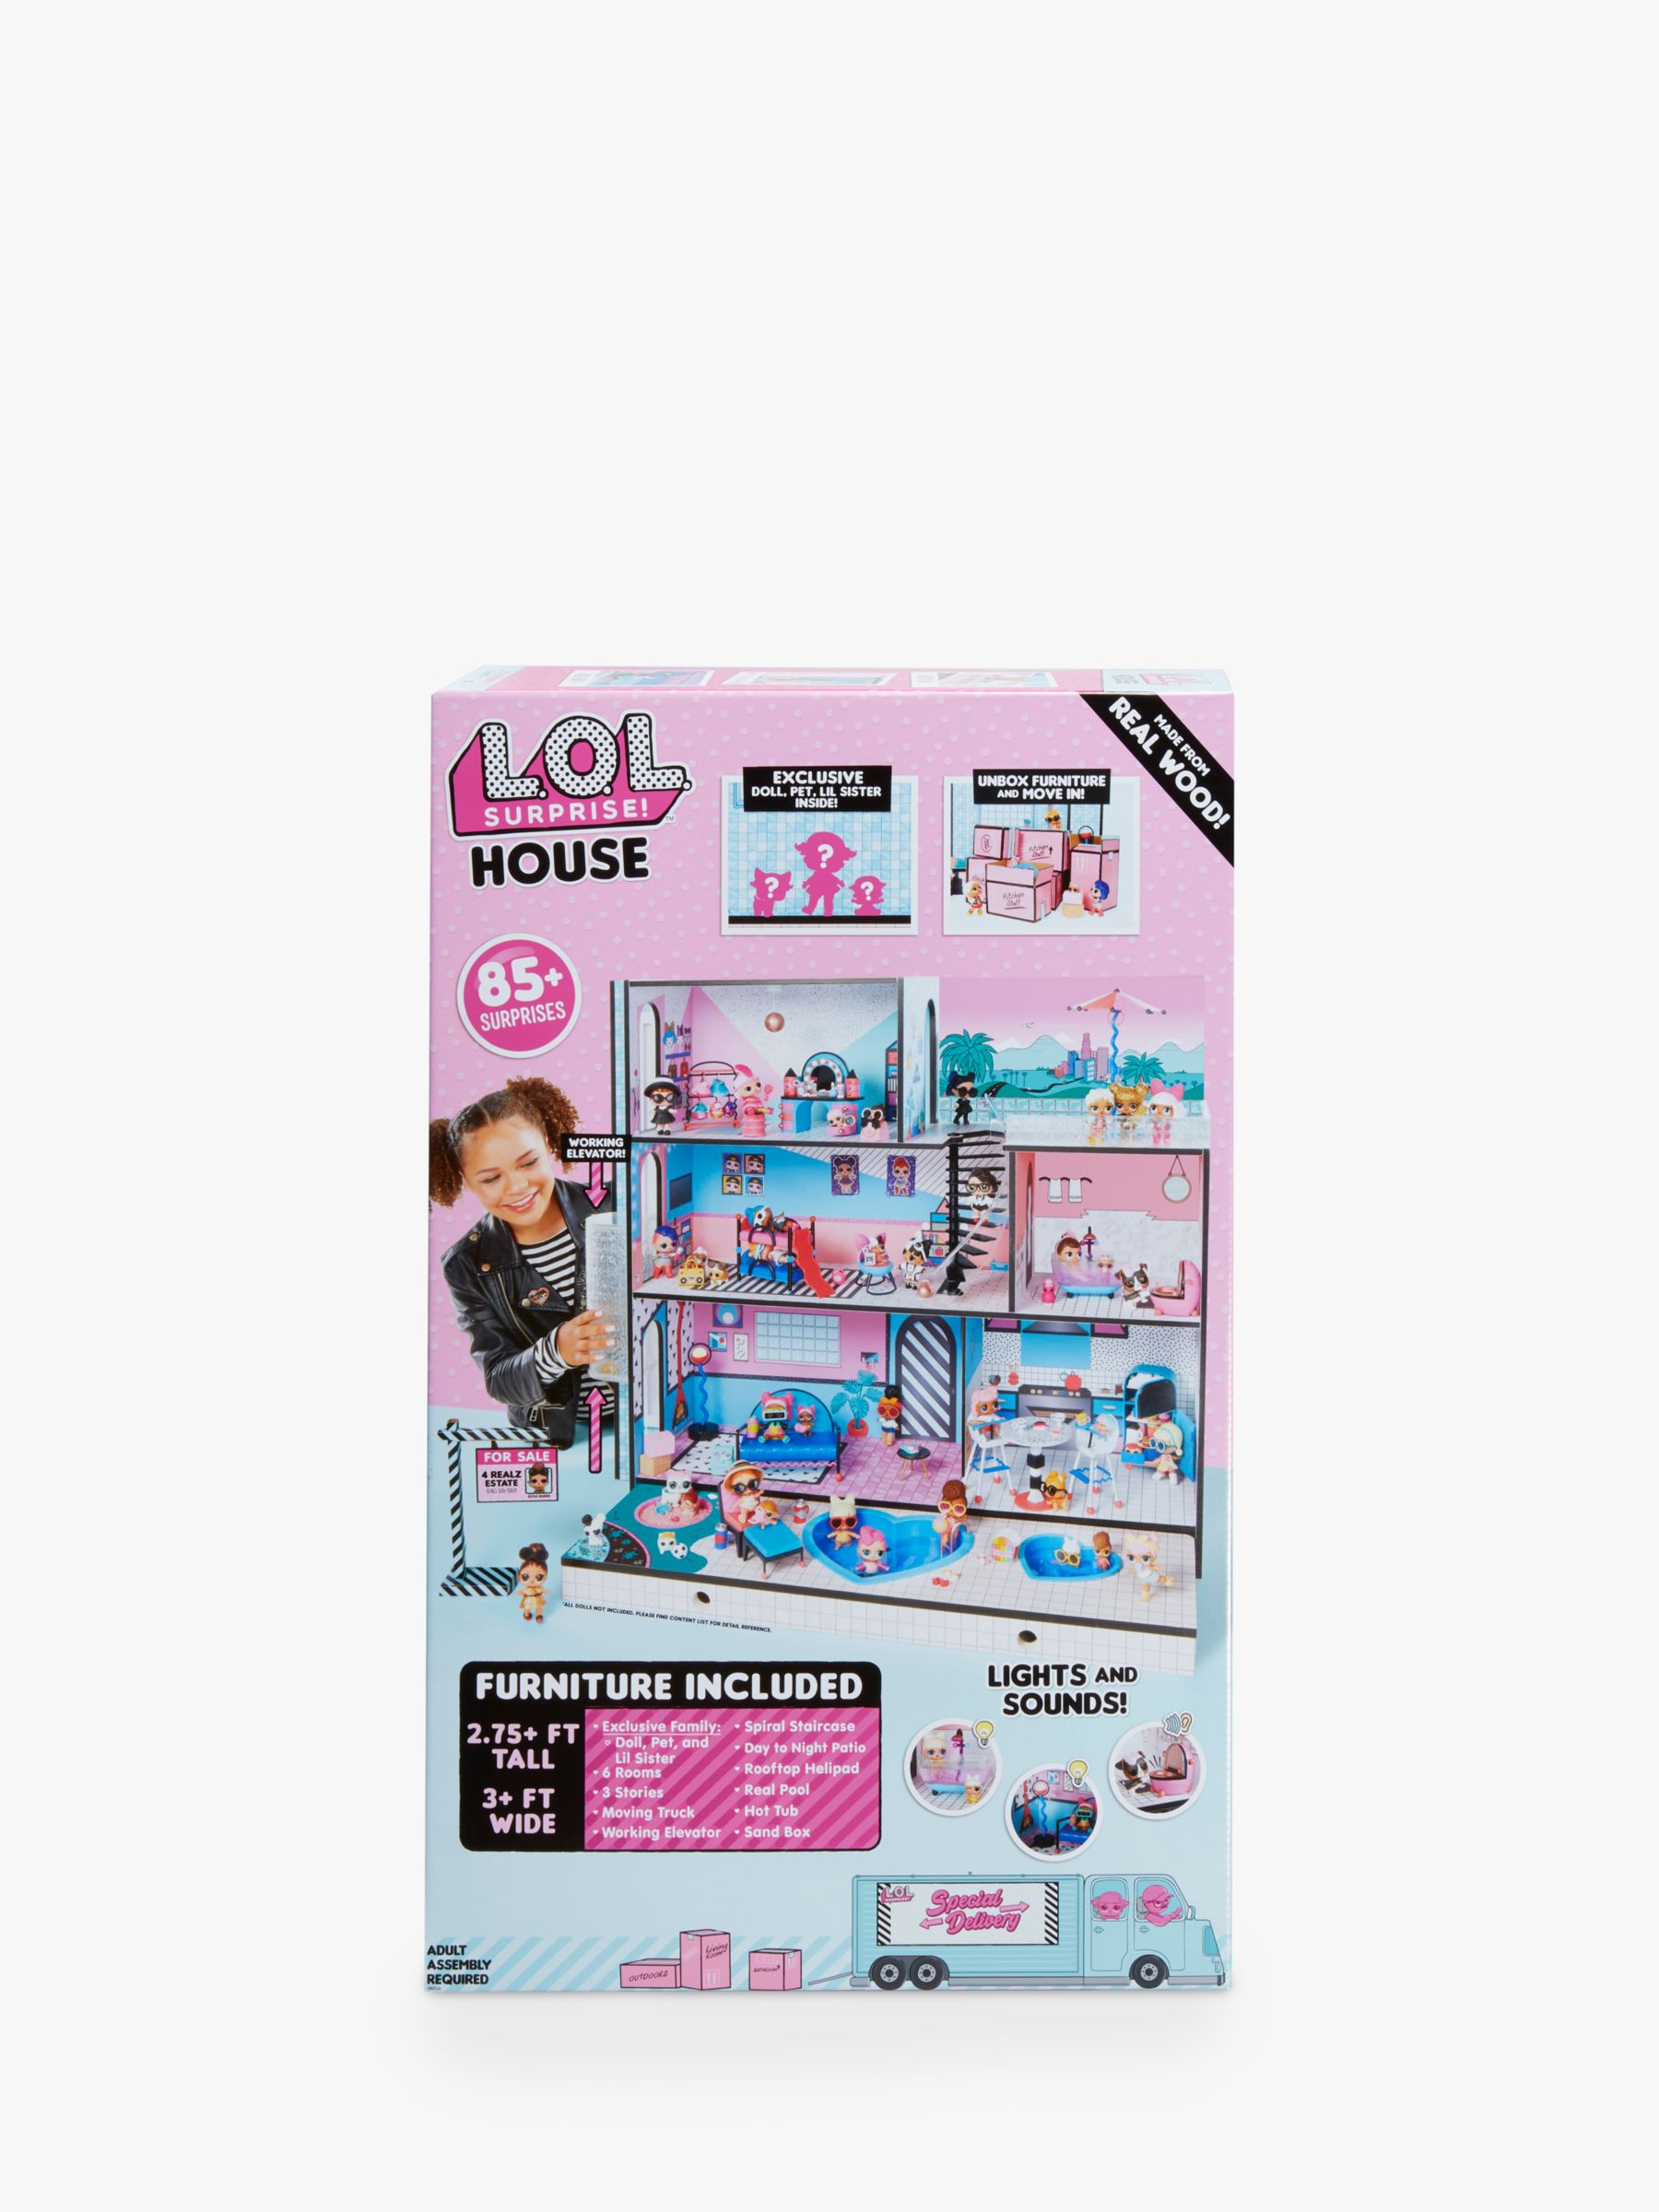 lol doll house set